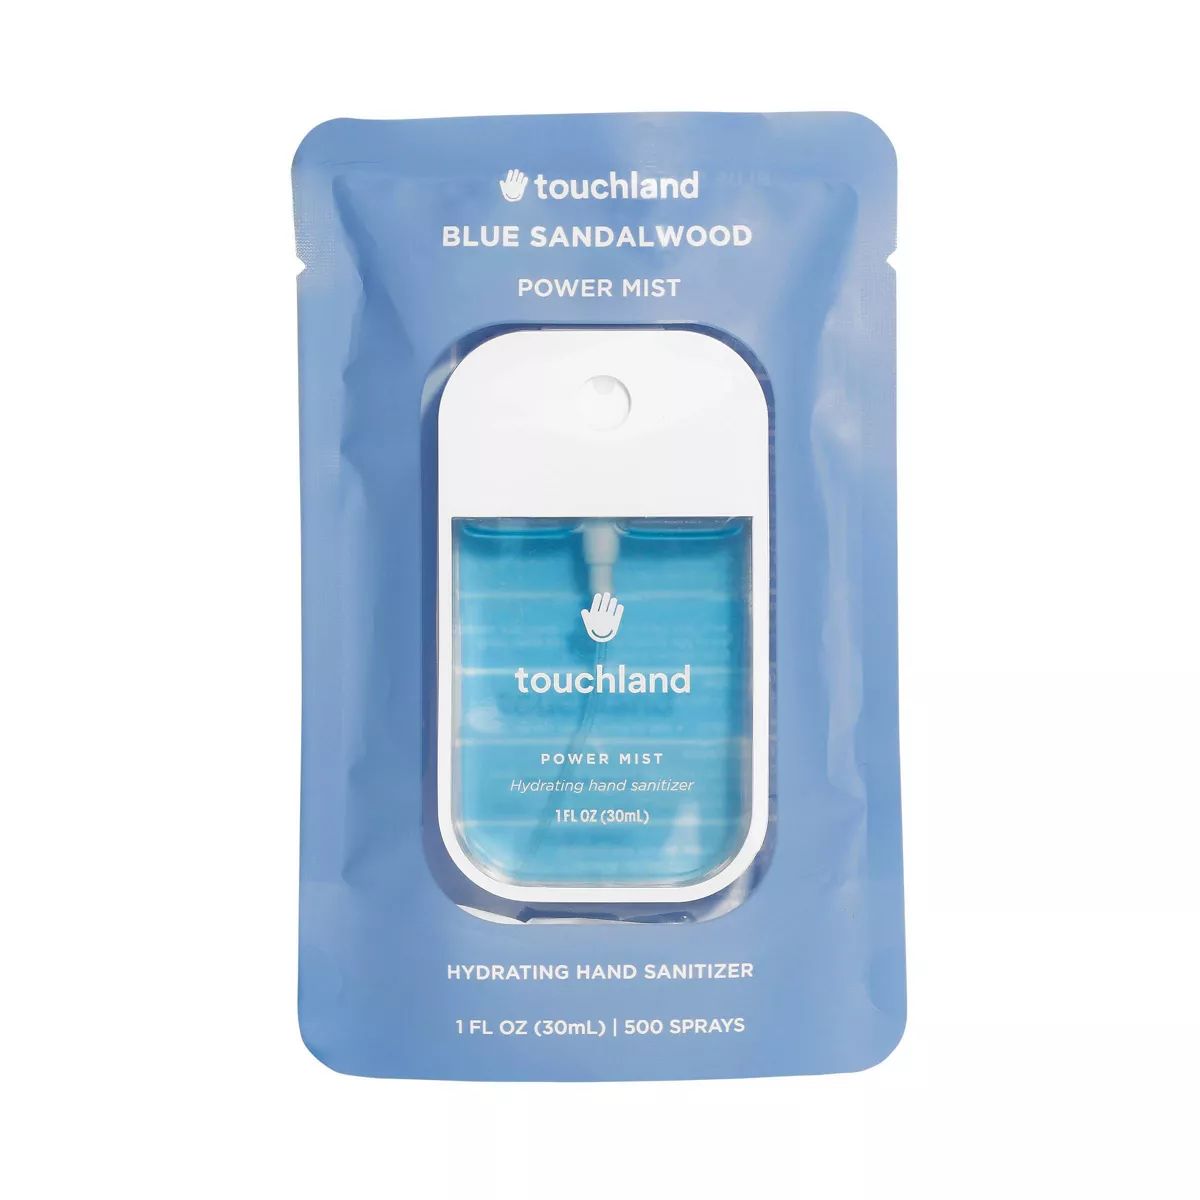 Touchland Power Mist Hydrating Hand Sanitizer - Blue Sandalwood - 1 fl oz/500 sprays - Trial Size | Target